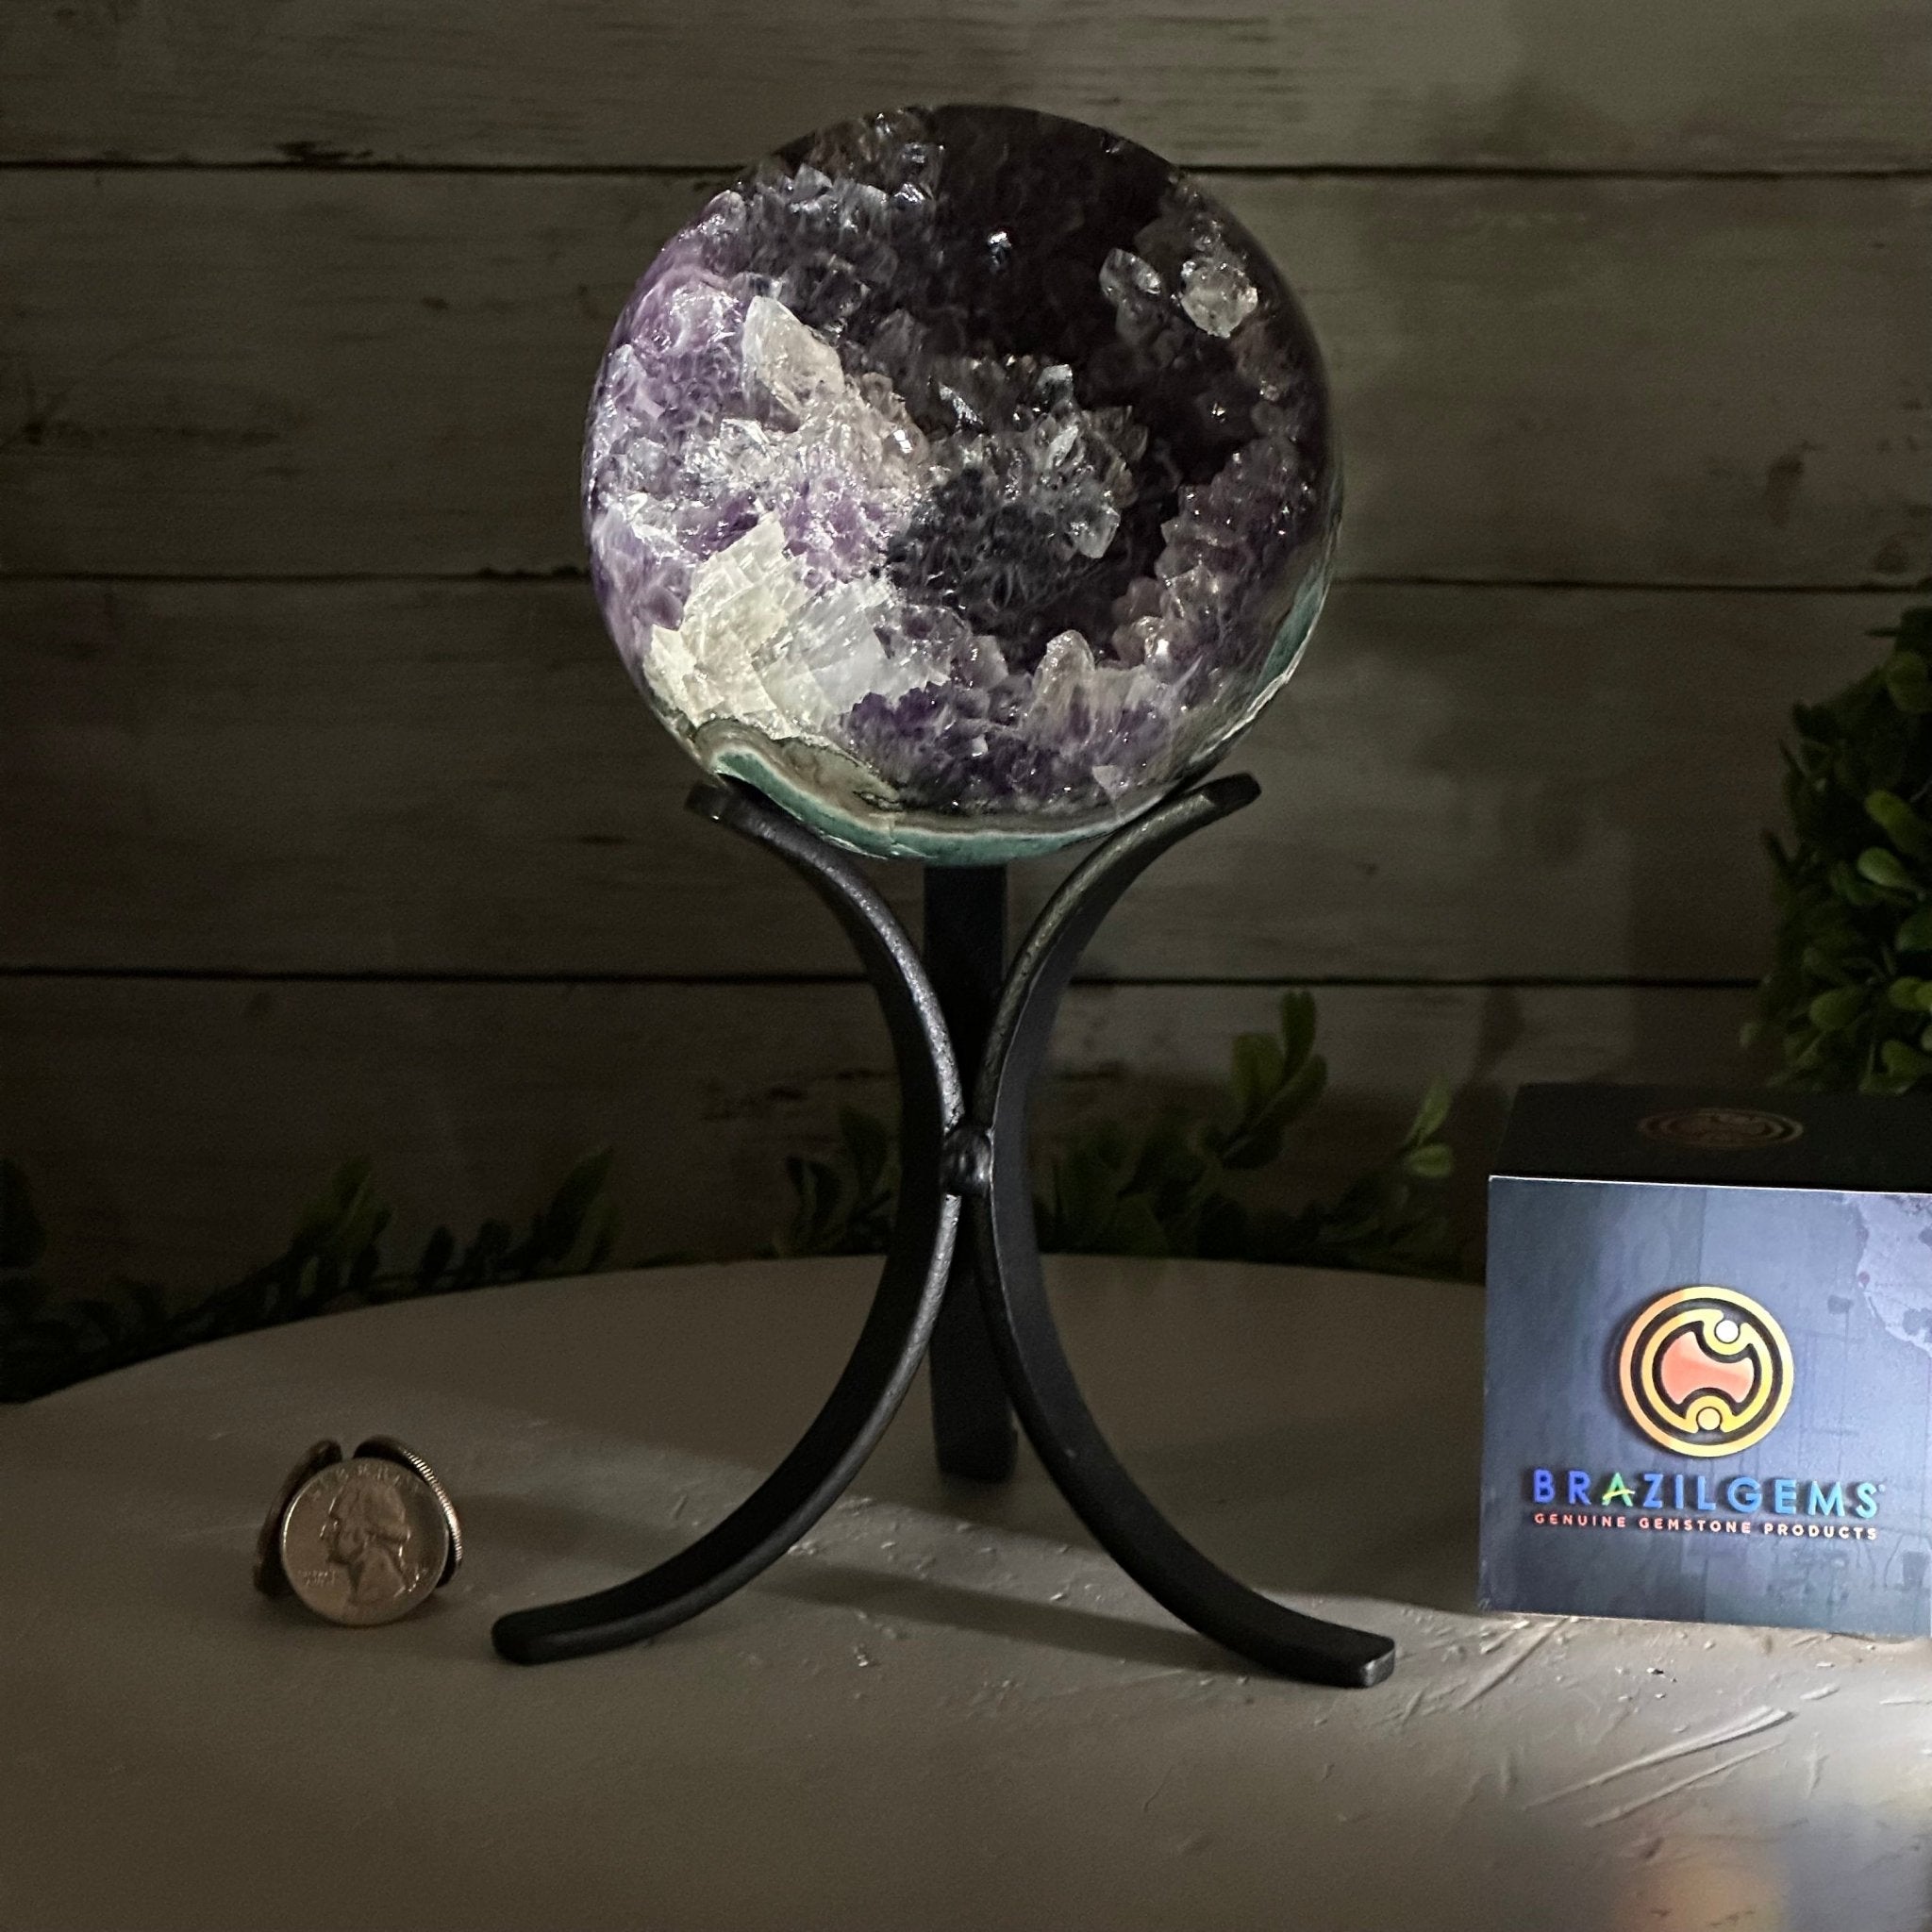 Druzy Amethyst Sphere on a Metal Stand, 3 lbs & 8.2" Tall #5630-0053 - Brazil GemsBrazil GemsDruzy Amethyst Sphere on a Metal Stand, 3 lbs & 8.2" Tall #5630-0053Spheres5630-0053